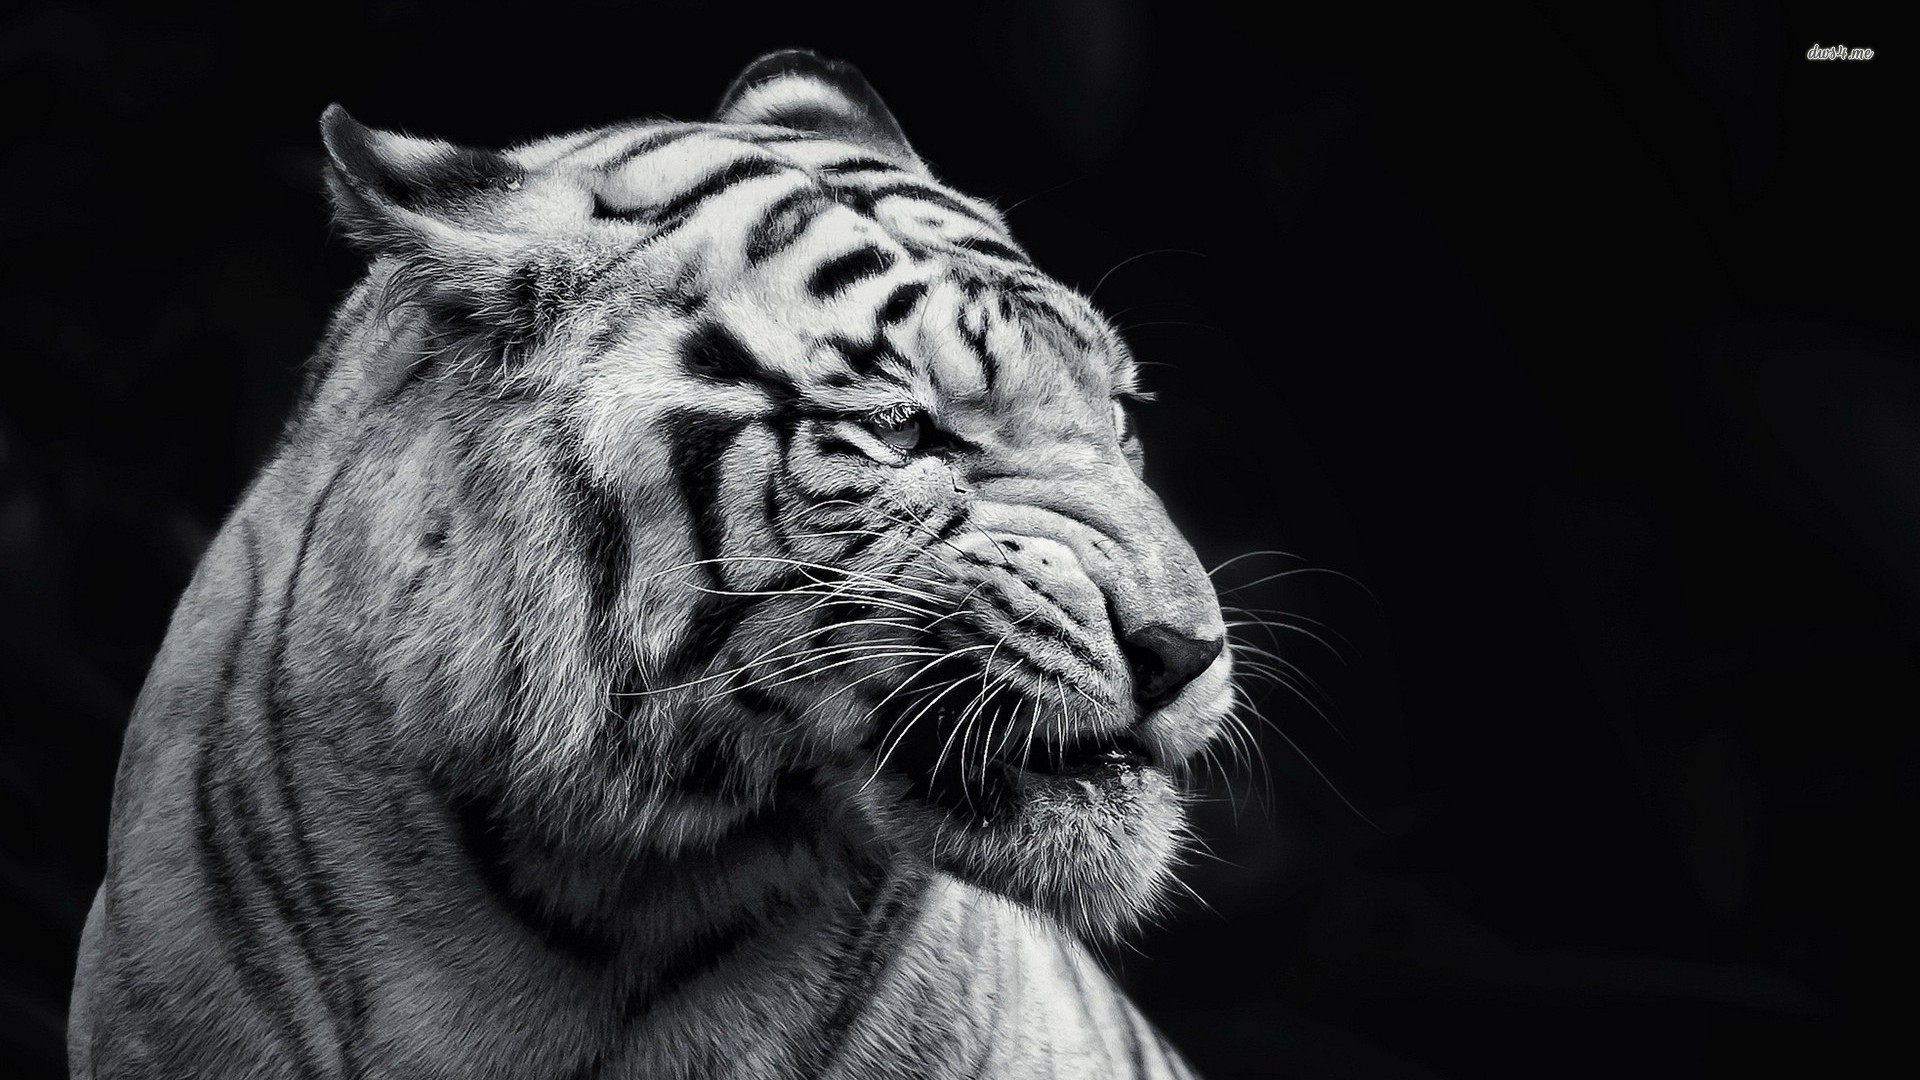 Black and white tiger wallpaper   974862 1920x1080